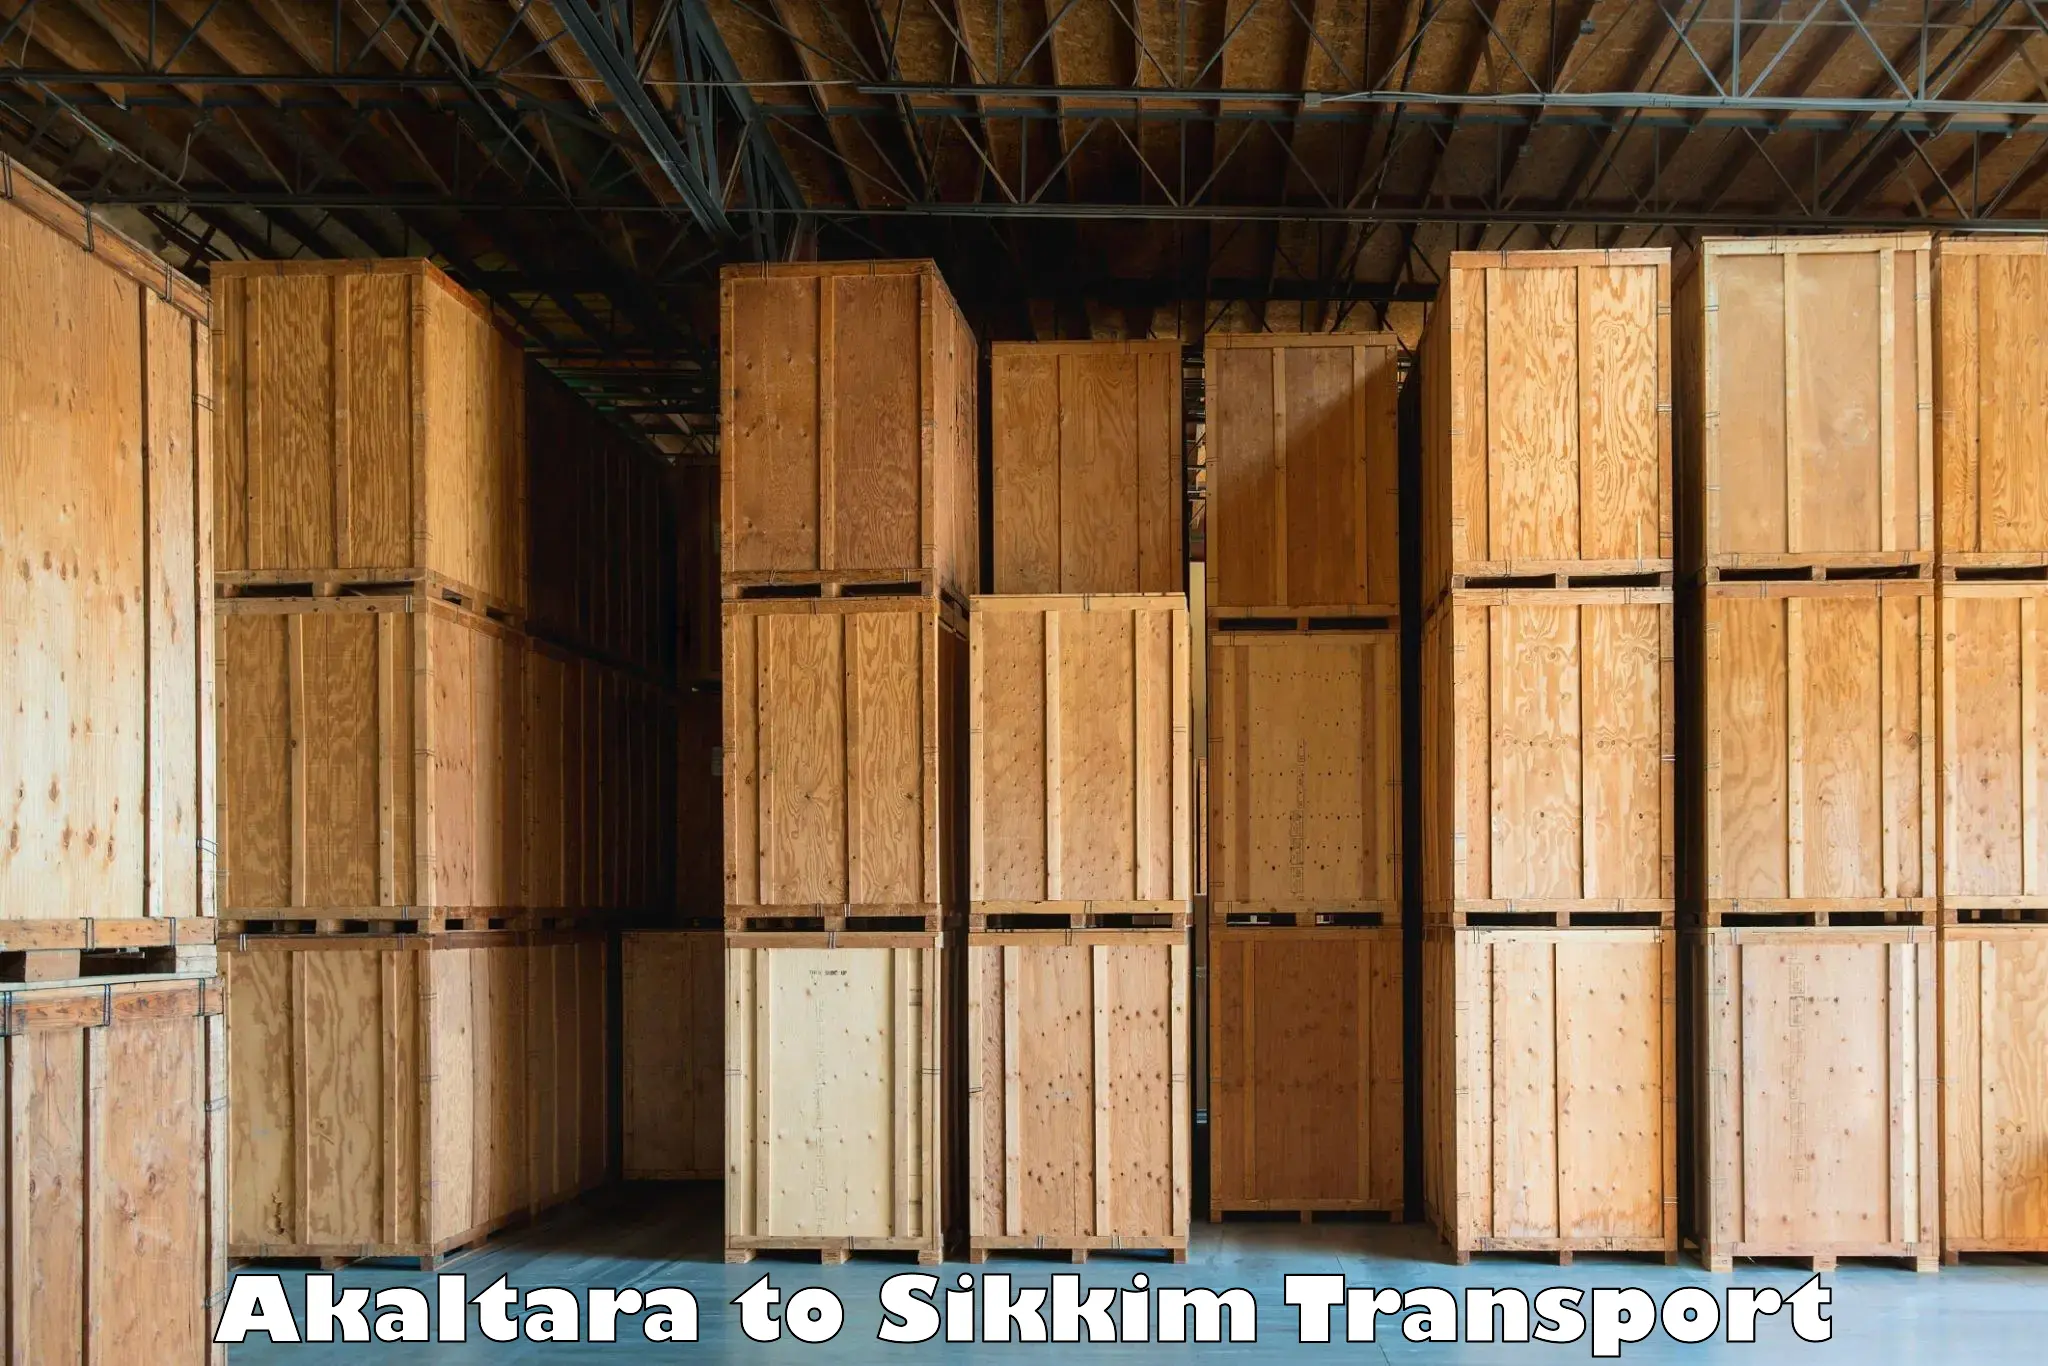 Daily transport service Akaltara to East Sikkim